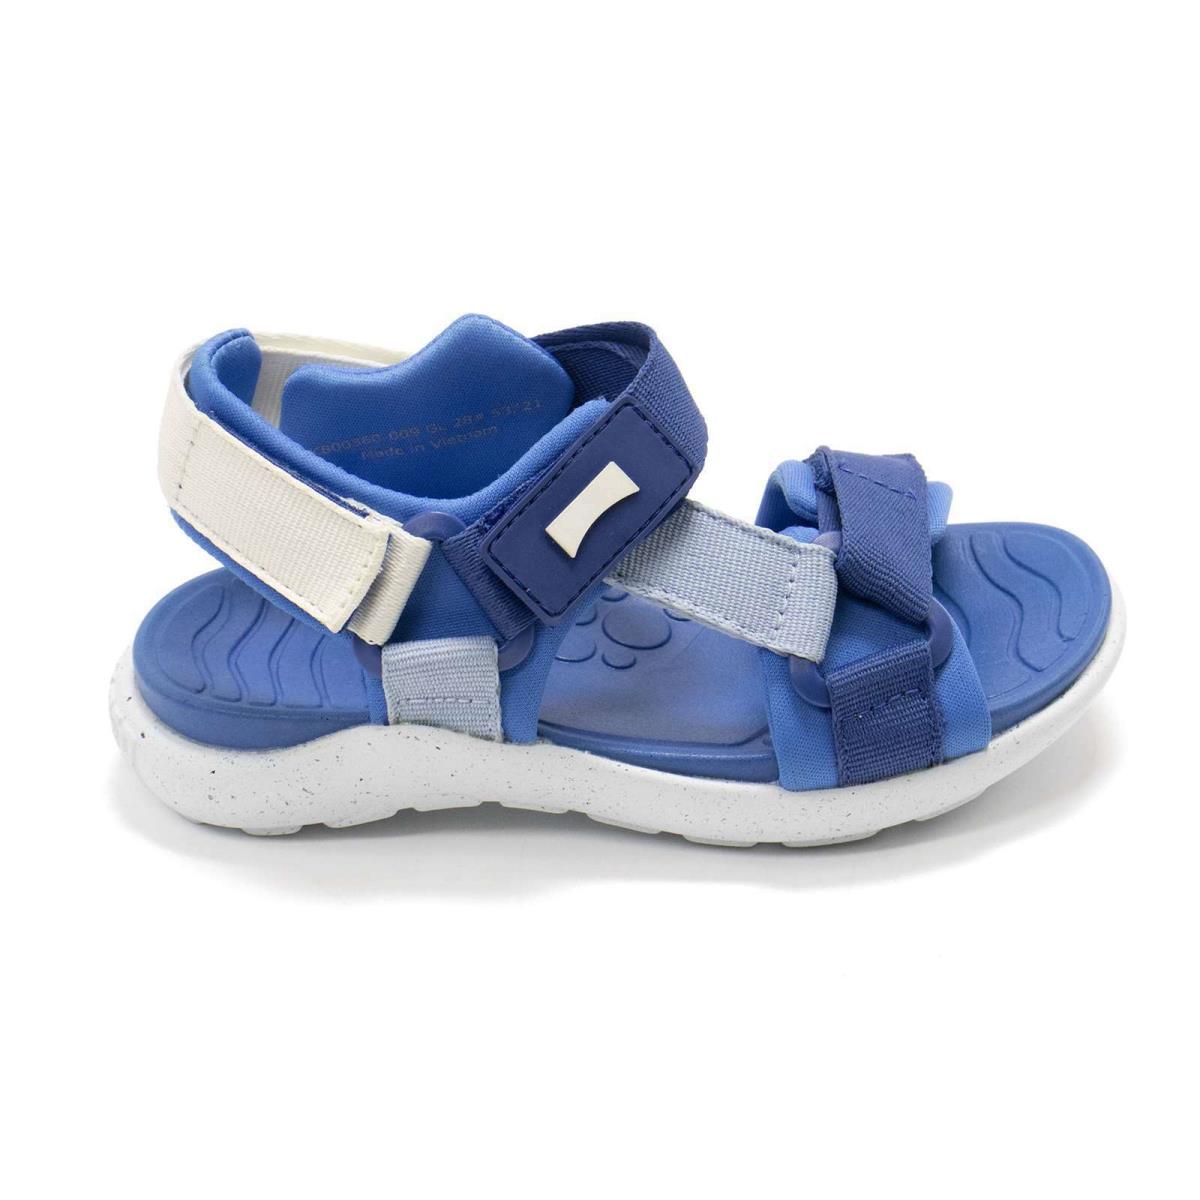 Boy Sandals Camper Wous Adjustable Sporty Sandals Comfort Fit Kids Shoes Blue